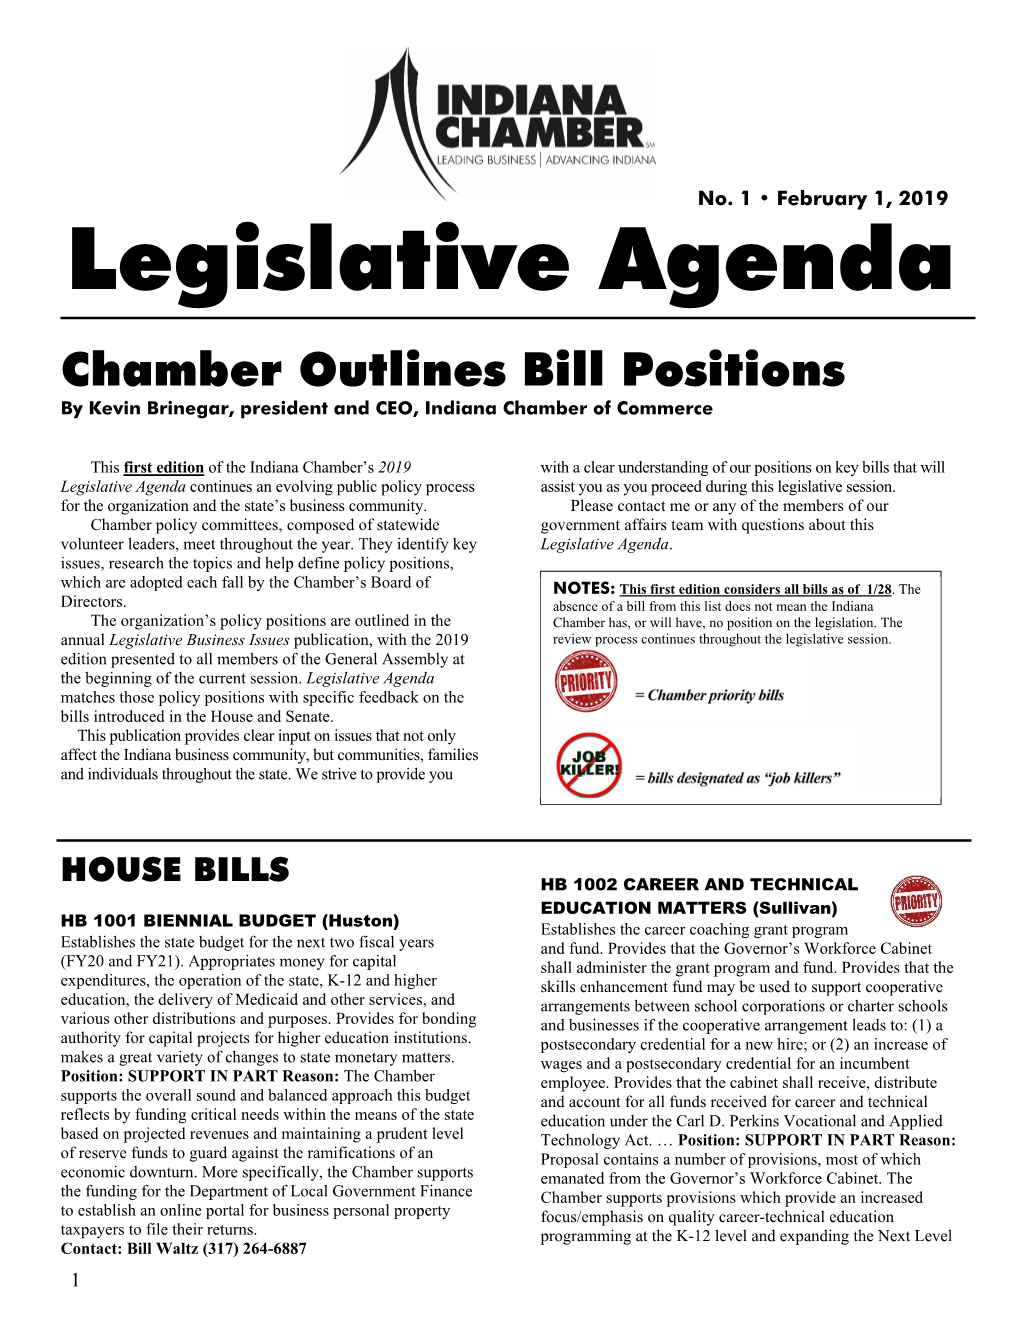 Legislative Agenda